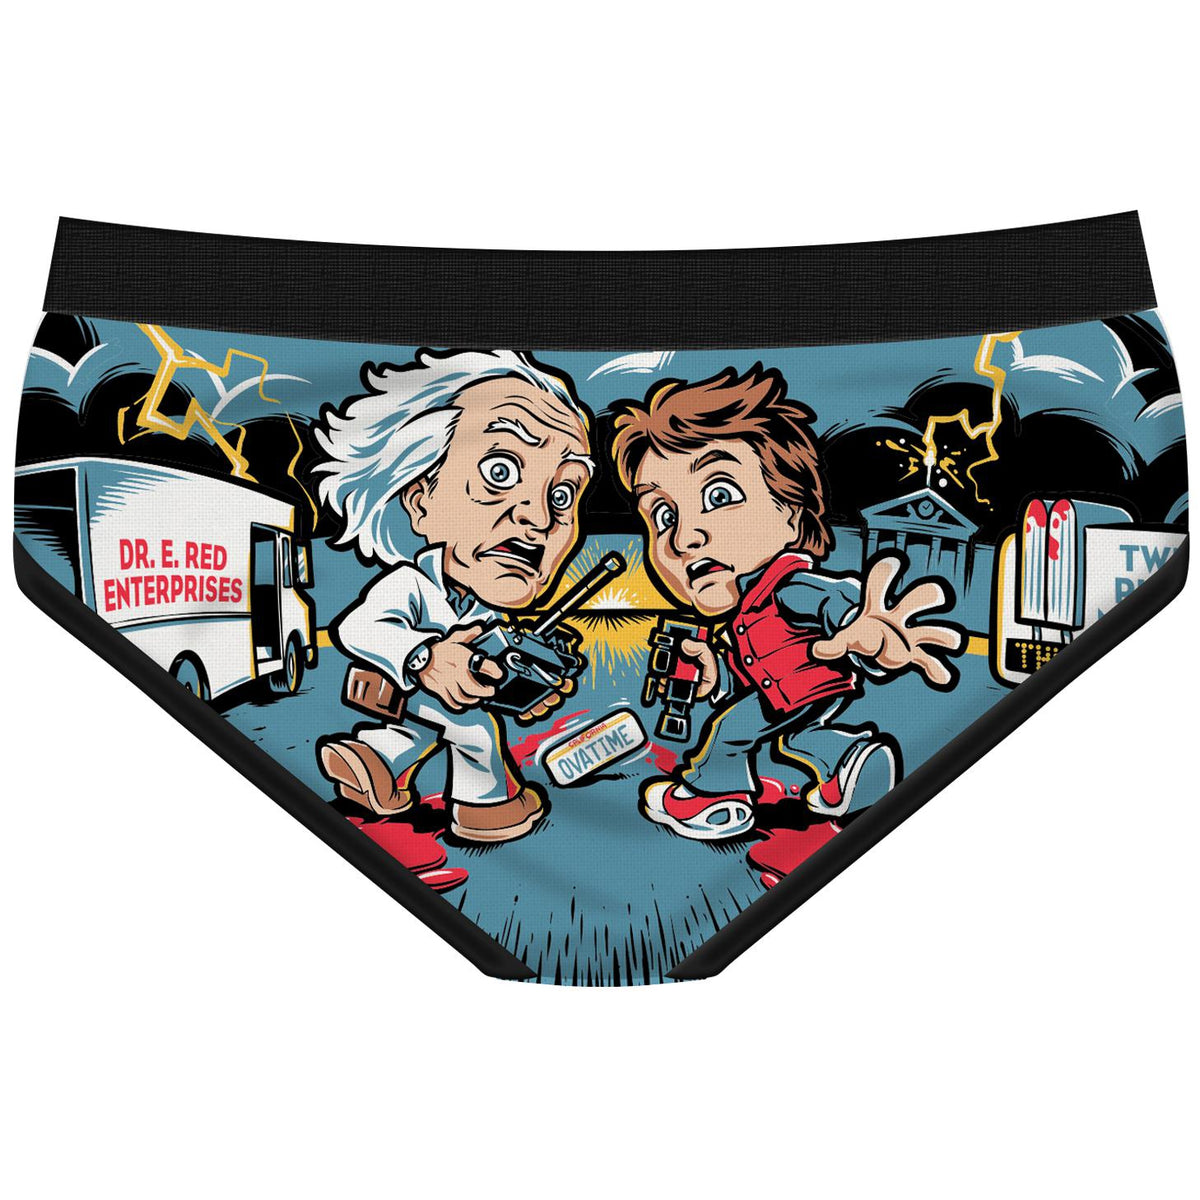 Great Clots Period Panties-Womens Underwear-Scarlett Dawn